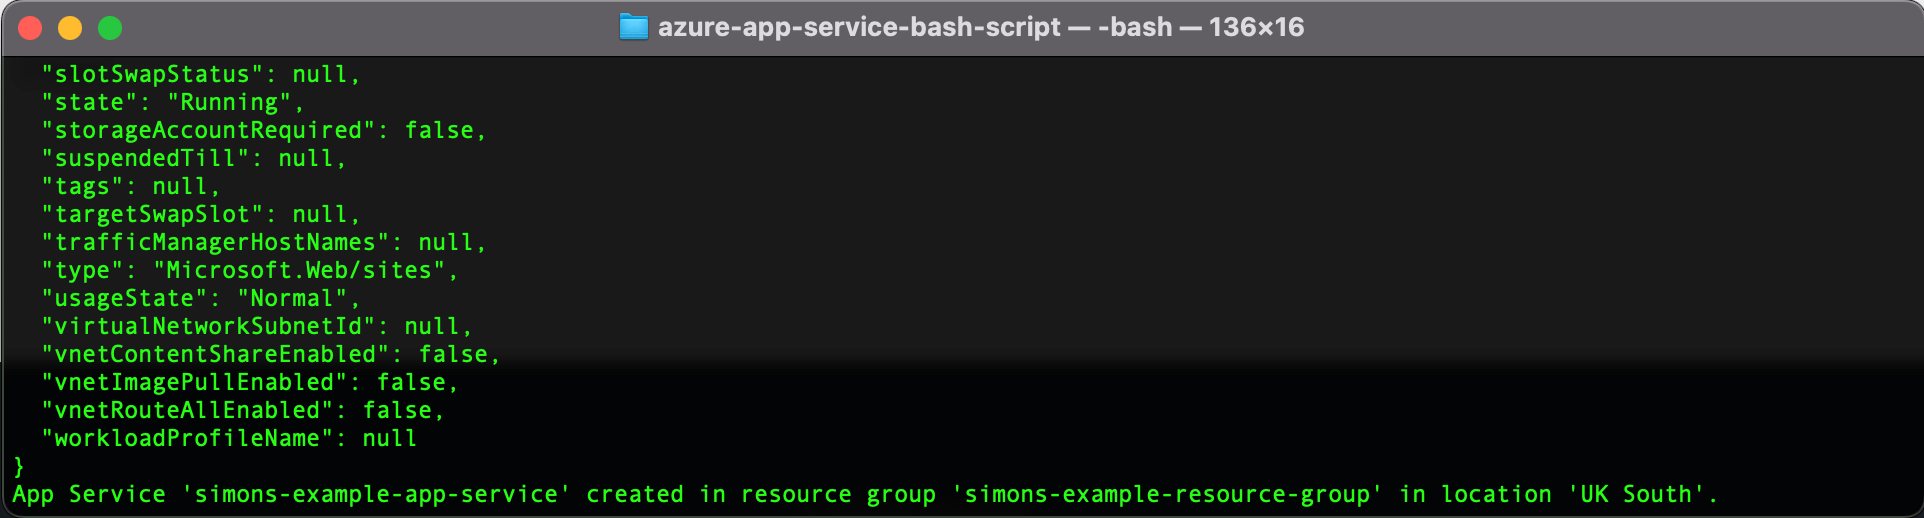 Azure-CLI App Service Bash Script Result